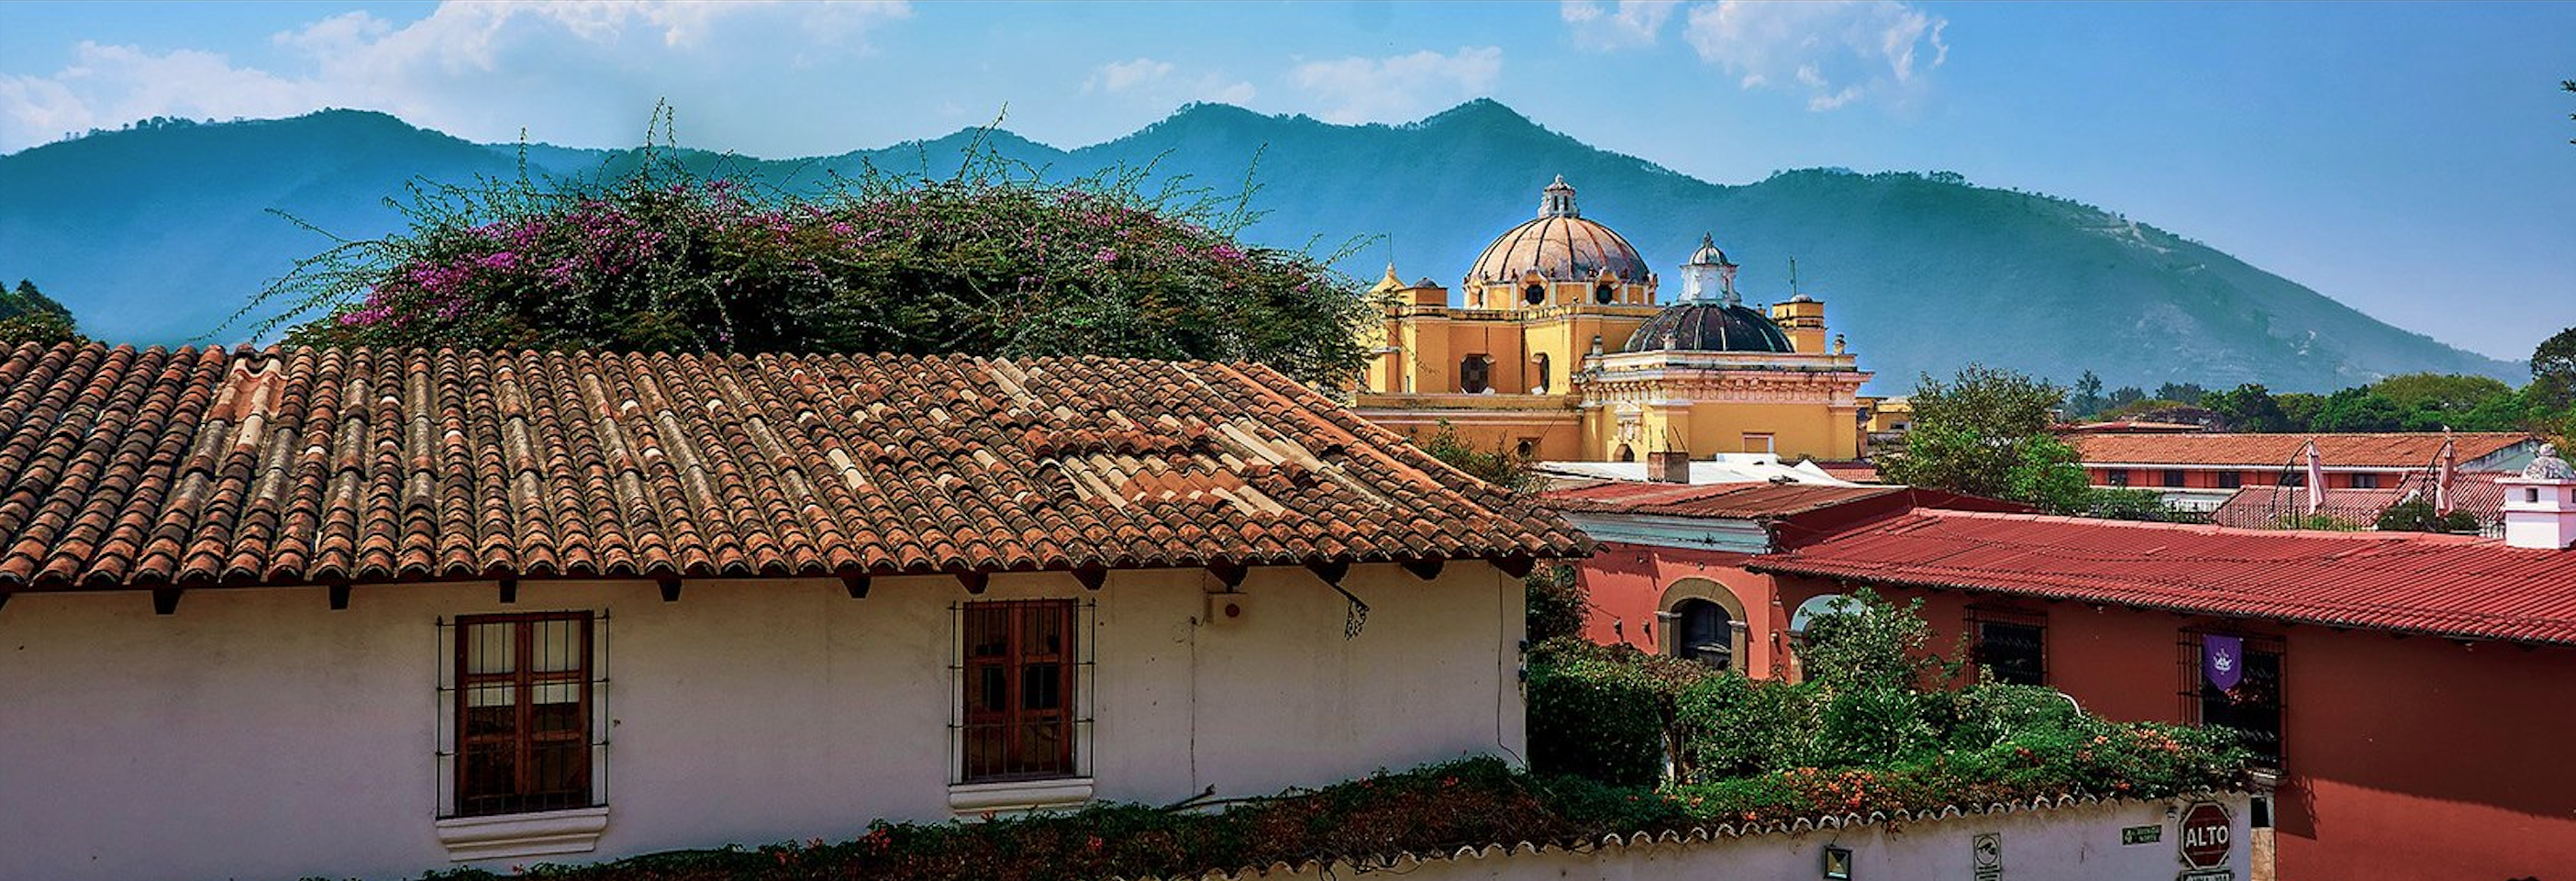 antigua guatemala trips and travel